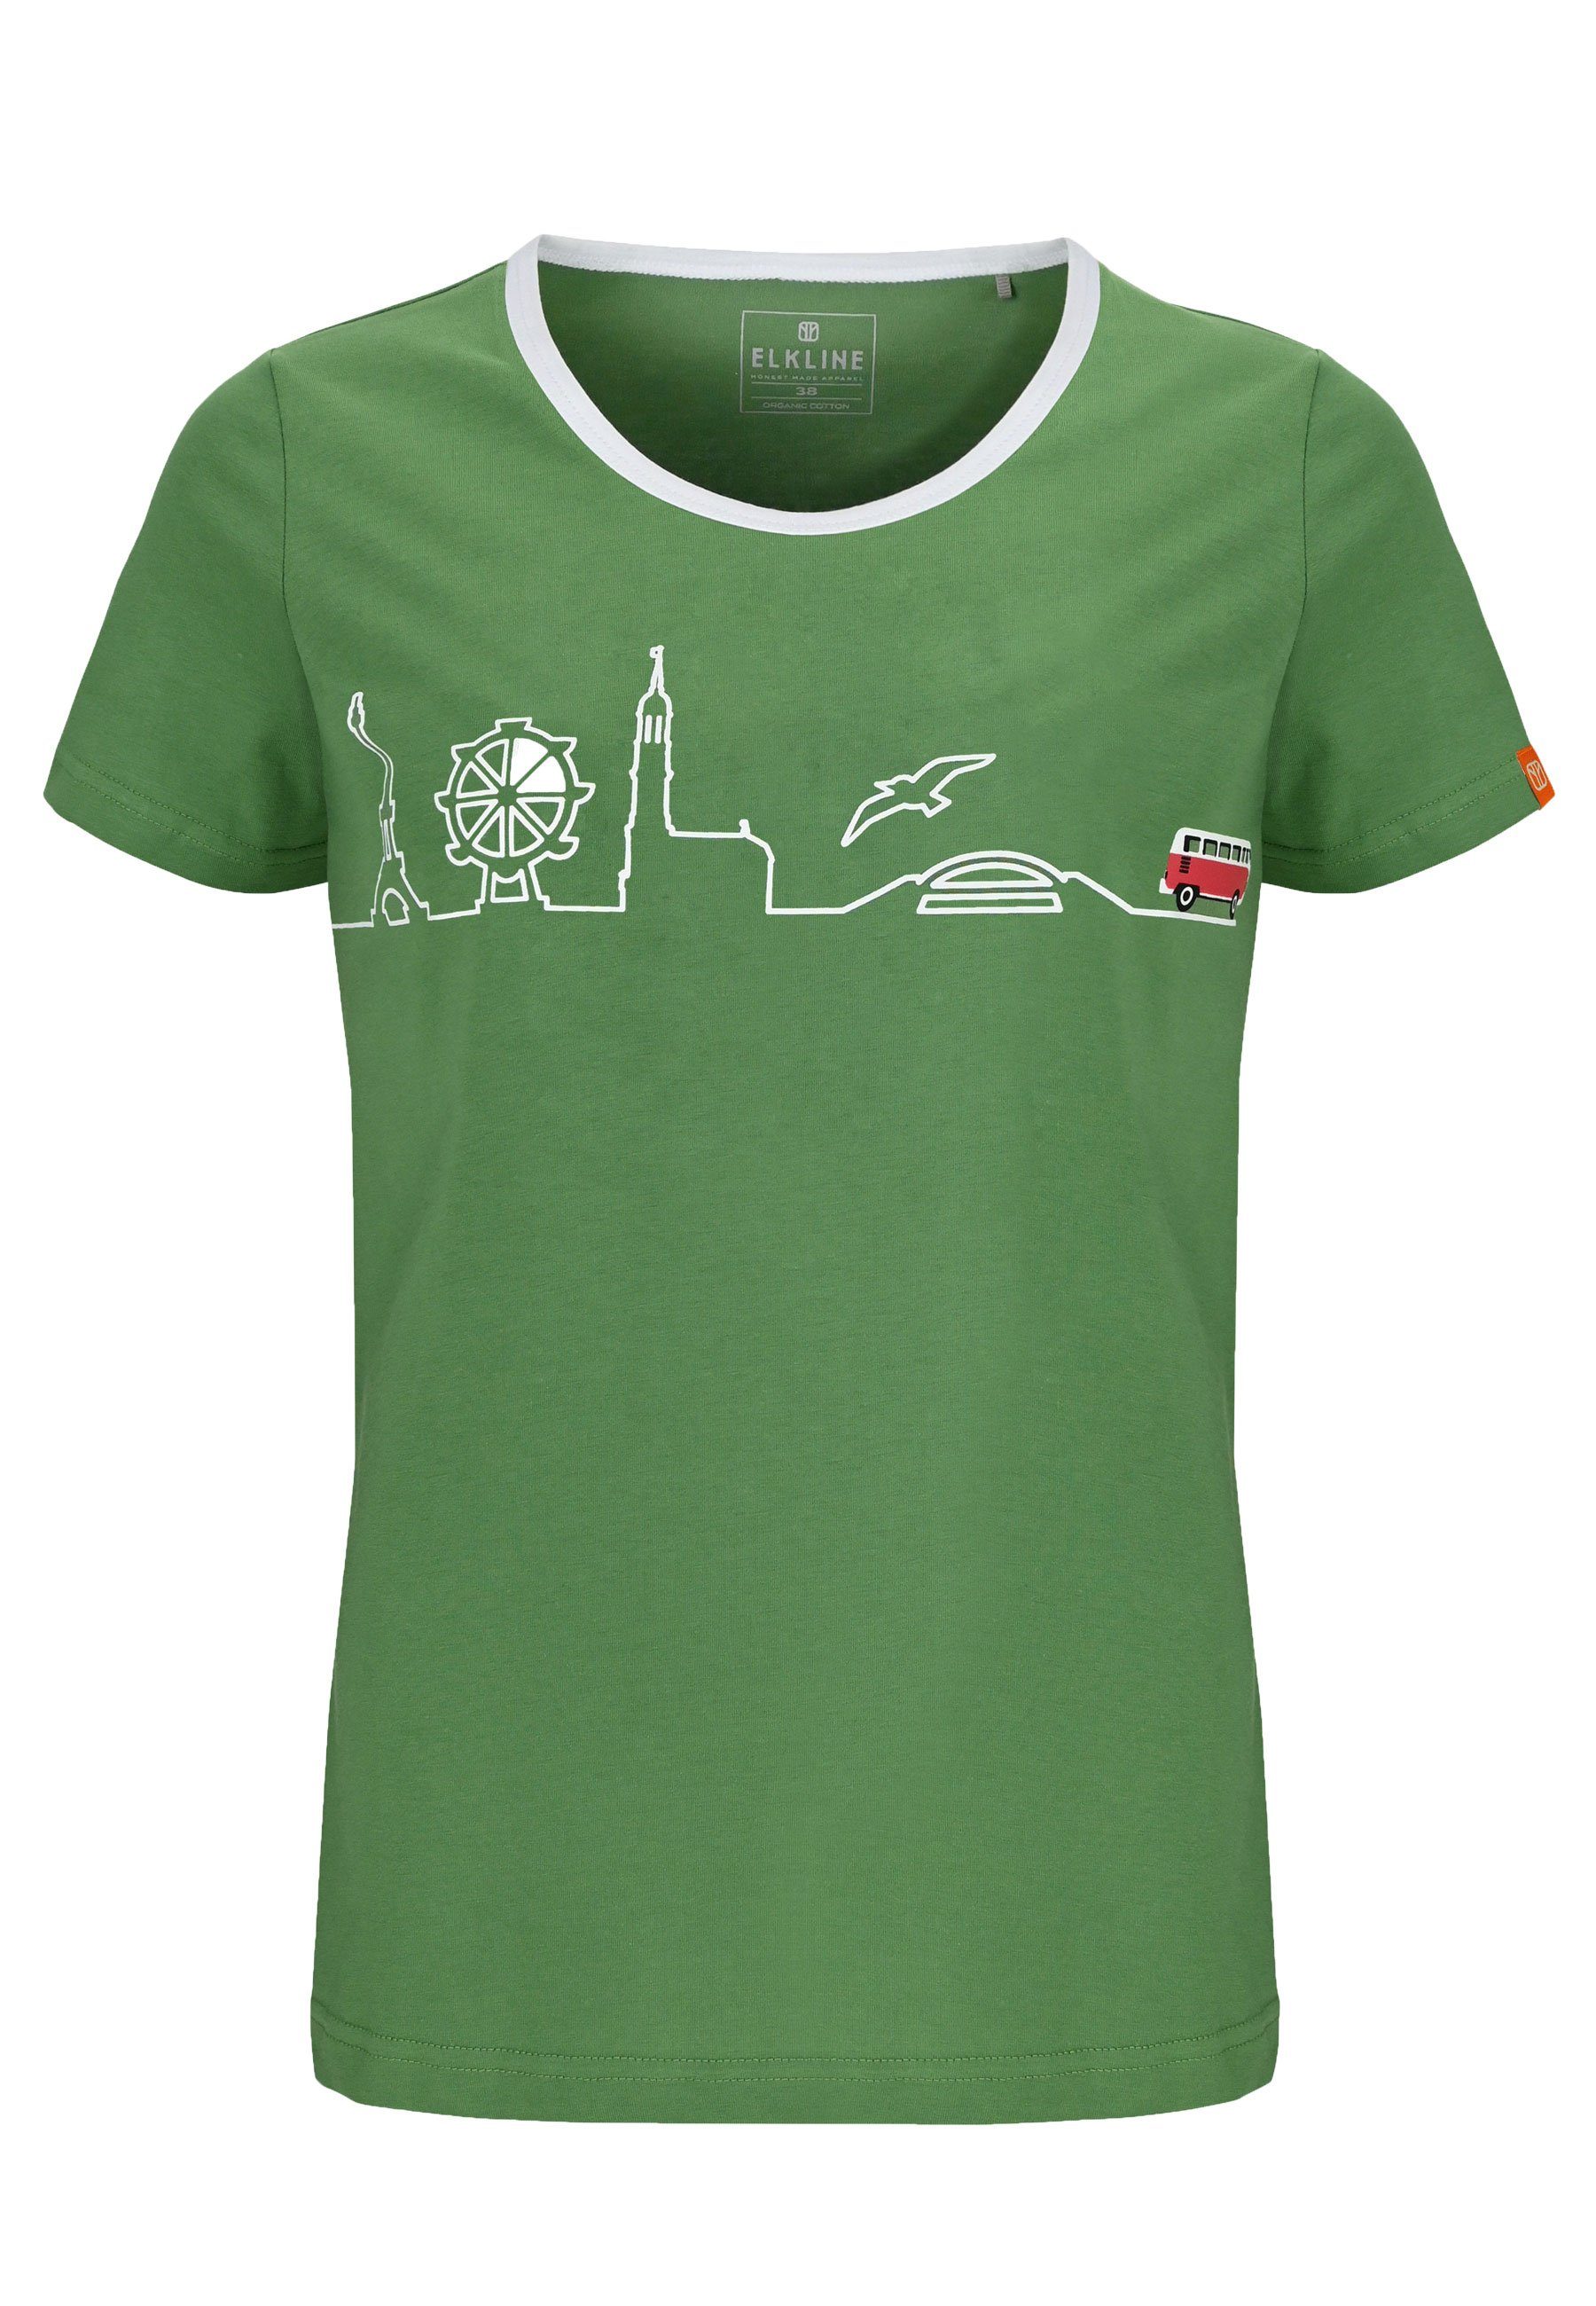 Elkline T-Shirt Little Things VW Brust Rücken und Print Reise Bulli mossgreen